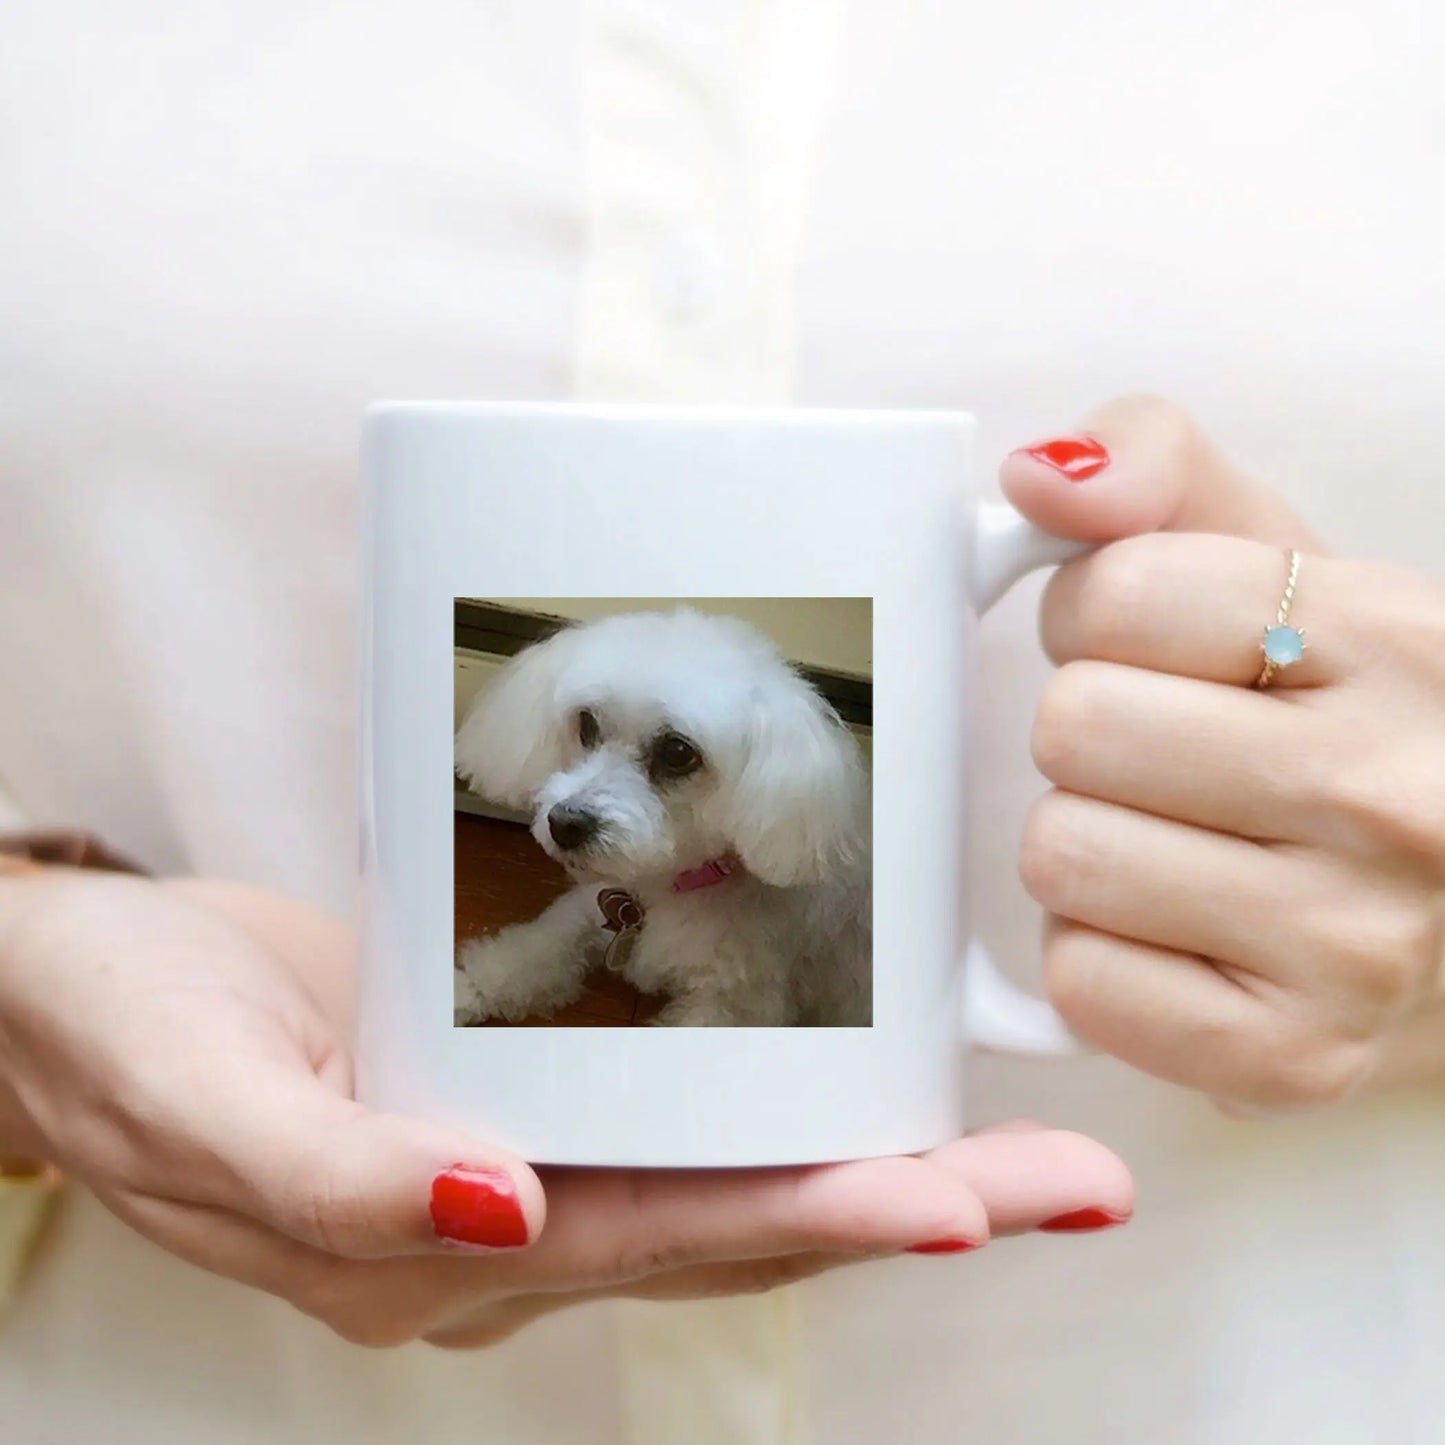 Baby Photo Gift Coffee Mug, Personalized Gift for New Parents Coffee Mug - 11 oz.